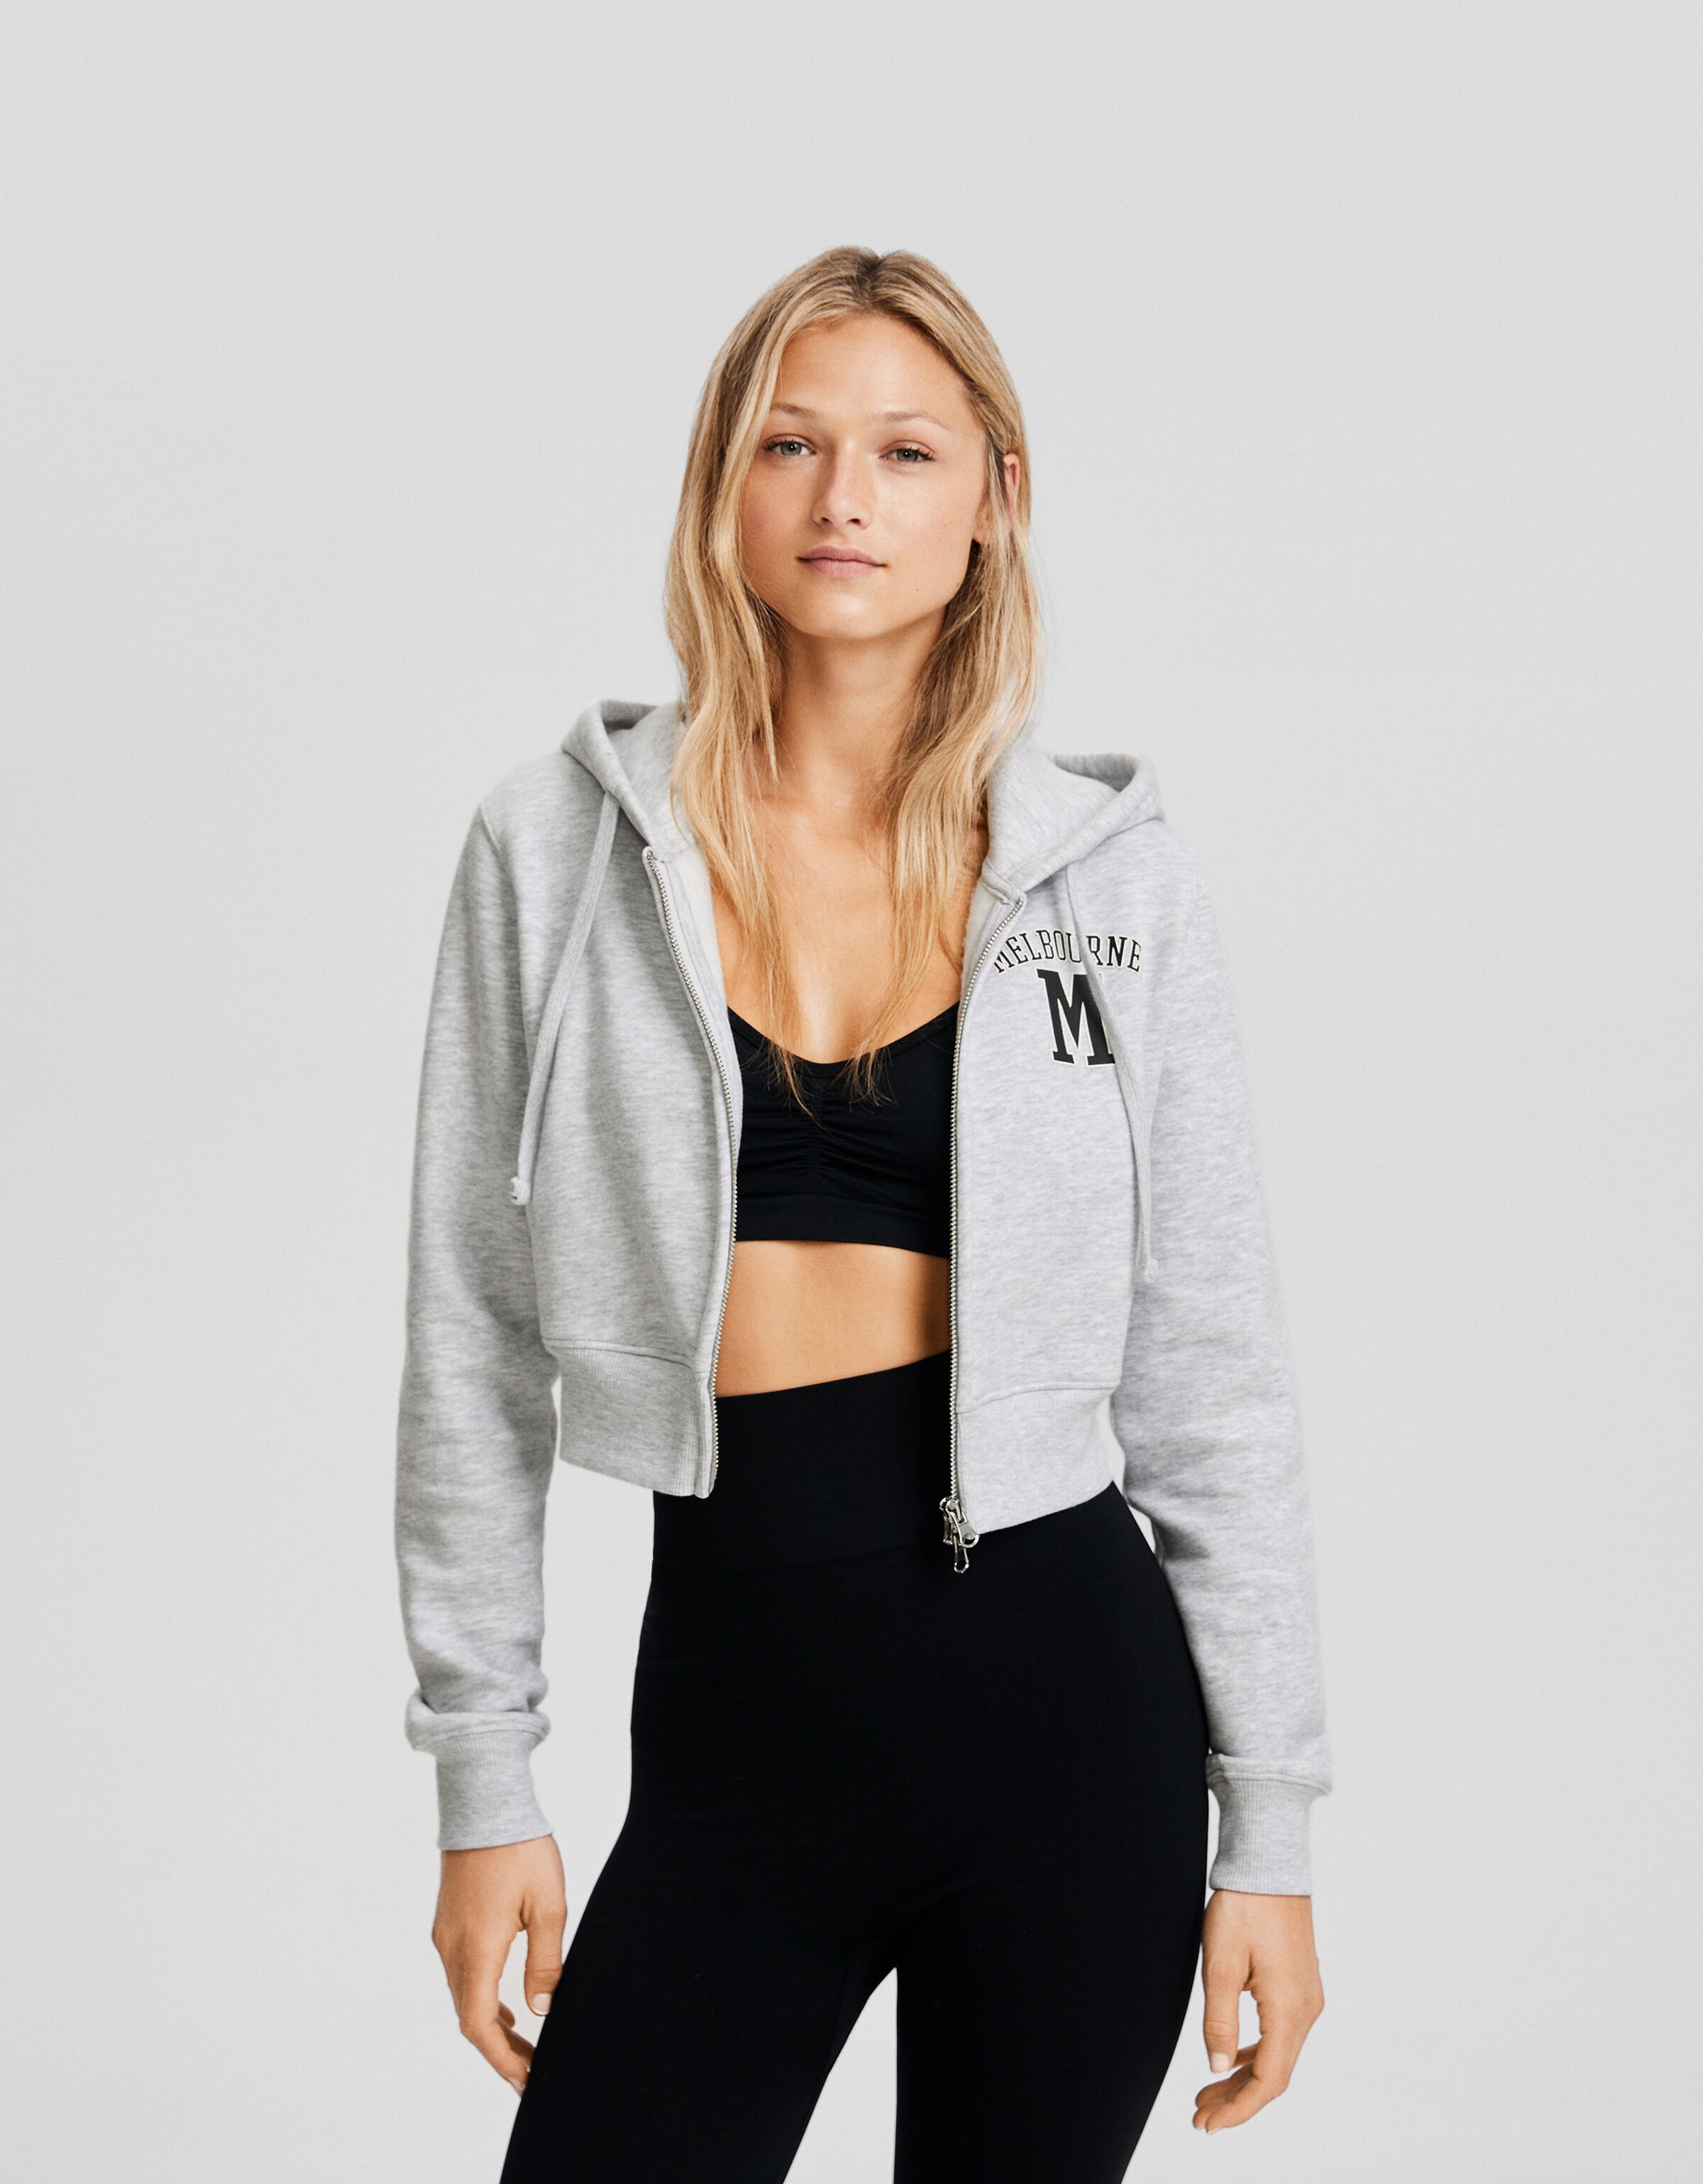 Girls' Boxy Cropped Zip-Up Hoodie Sweatshirt - art class™ Black XS